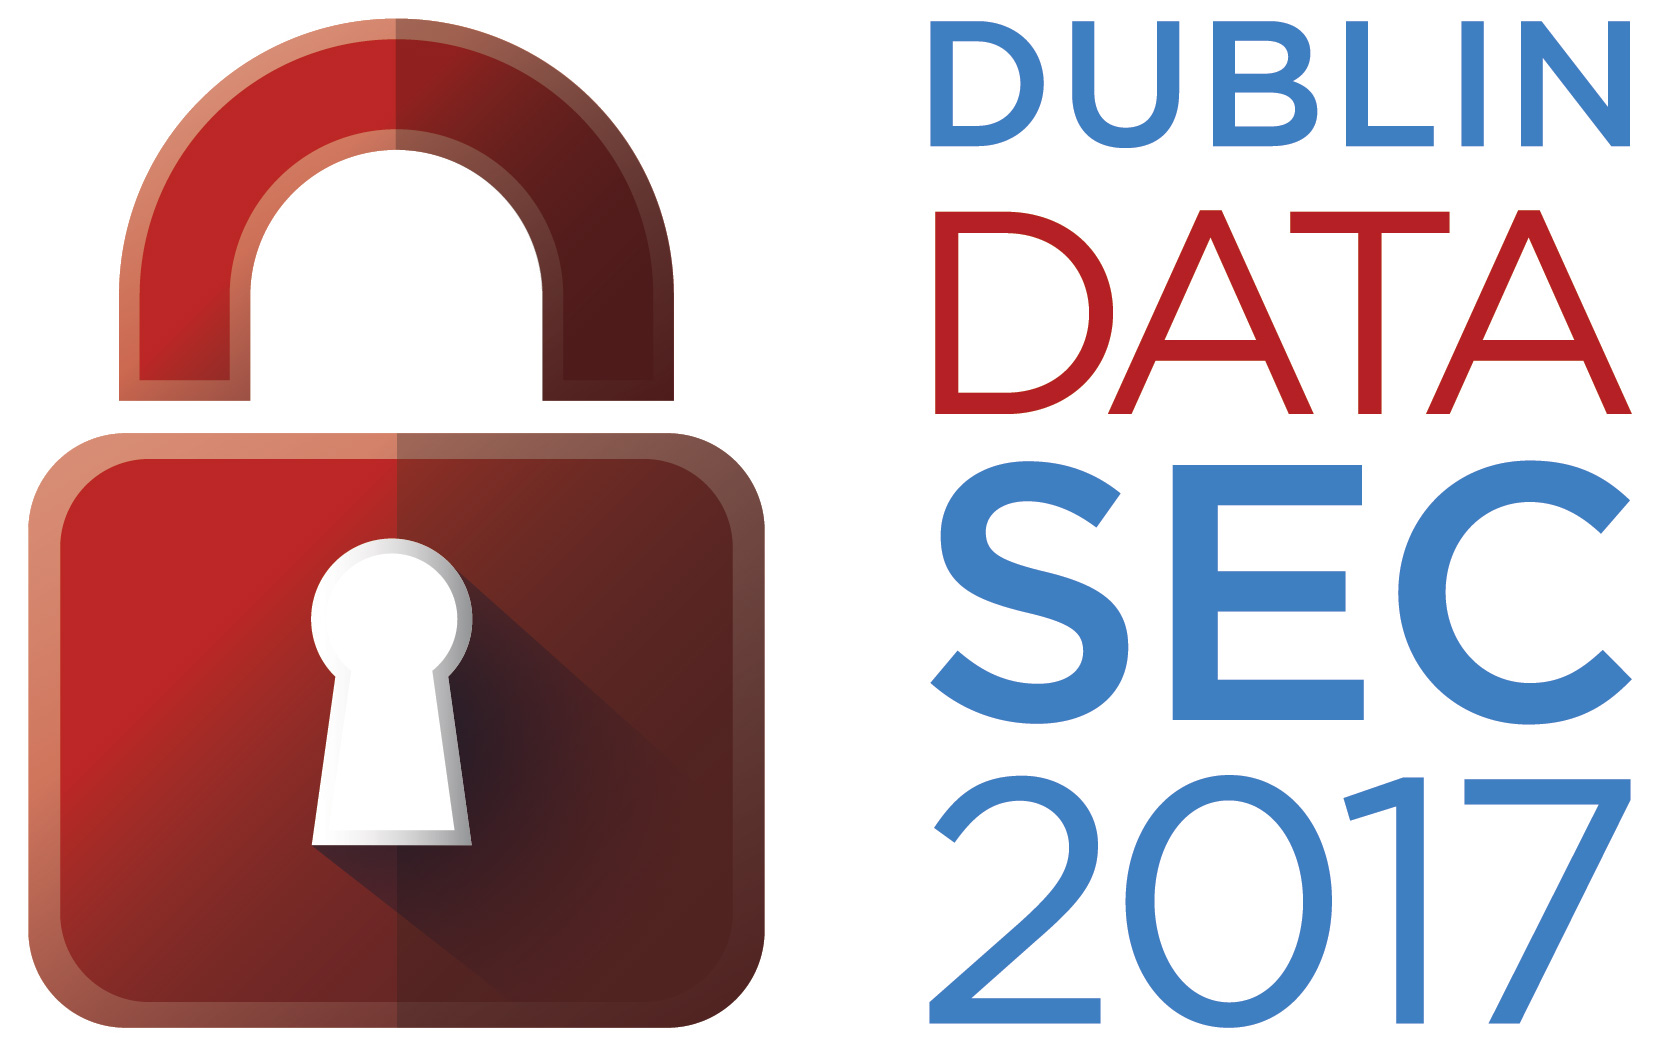 DUBLIN DATA SEC 2017